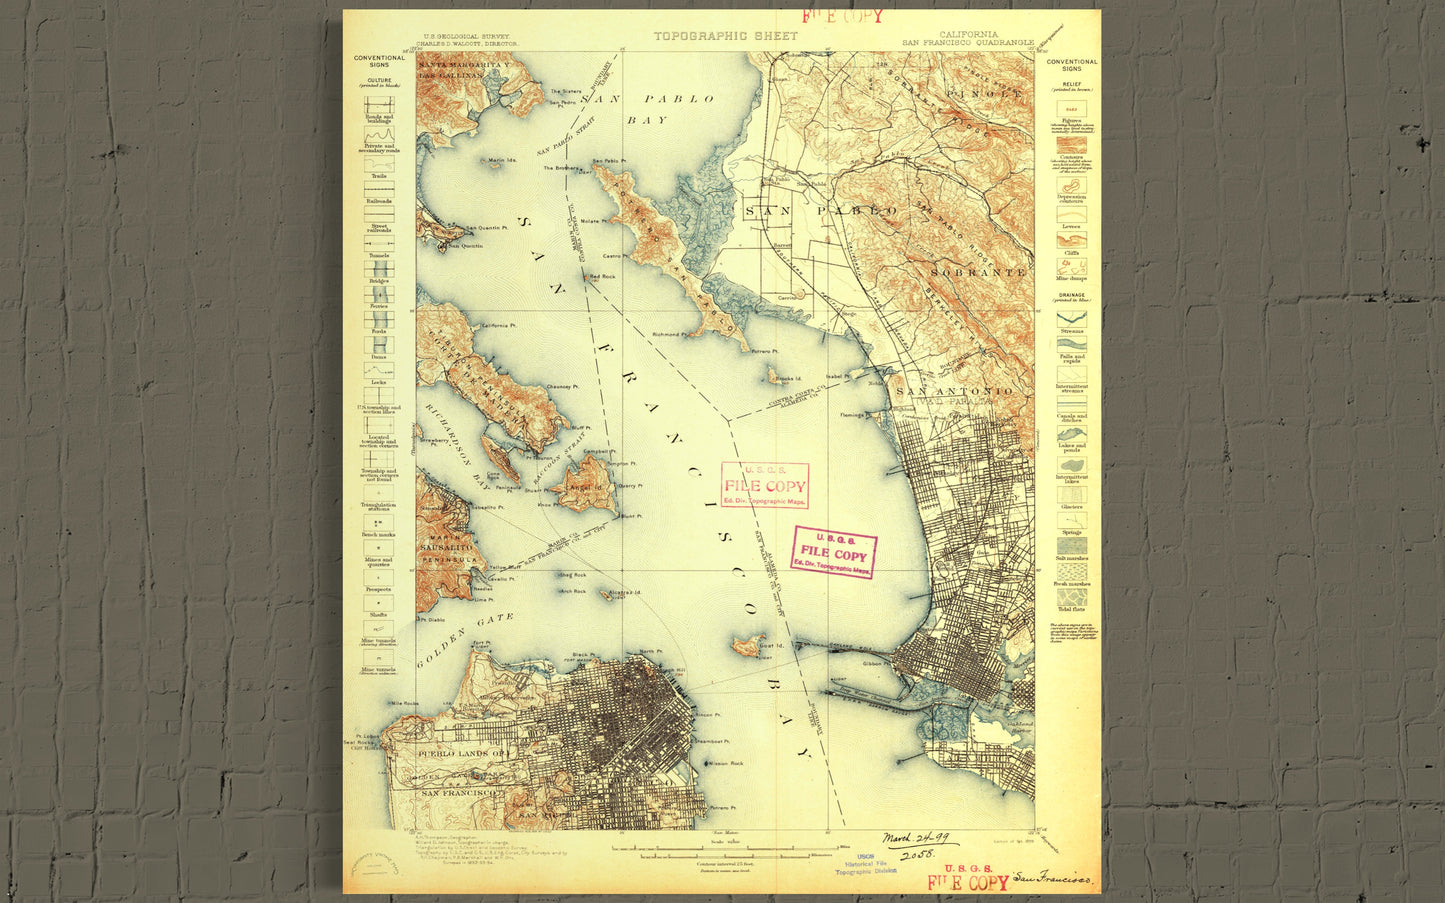 1899 Topographic Map of San Francisco California